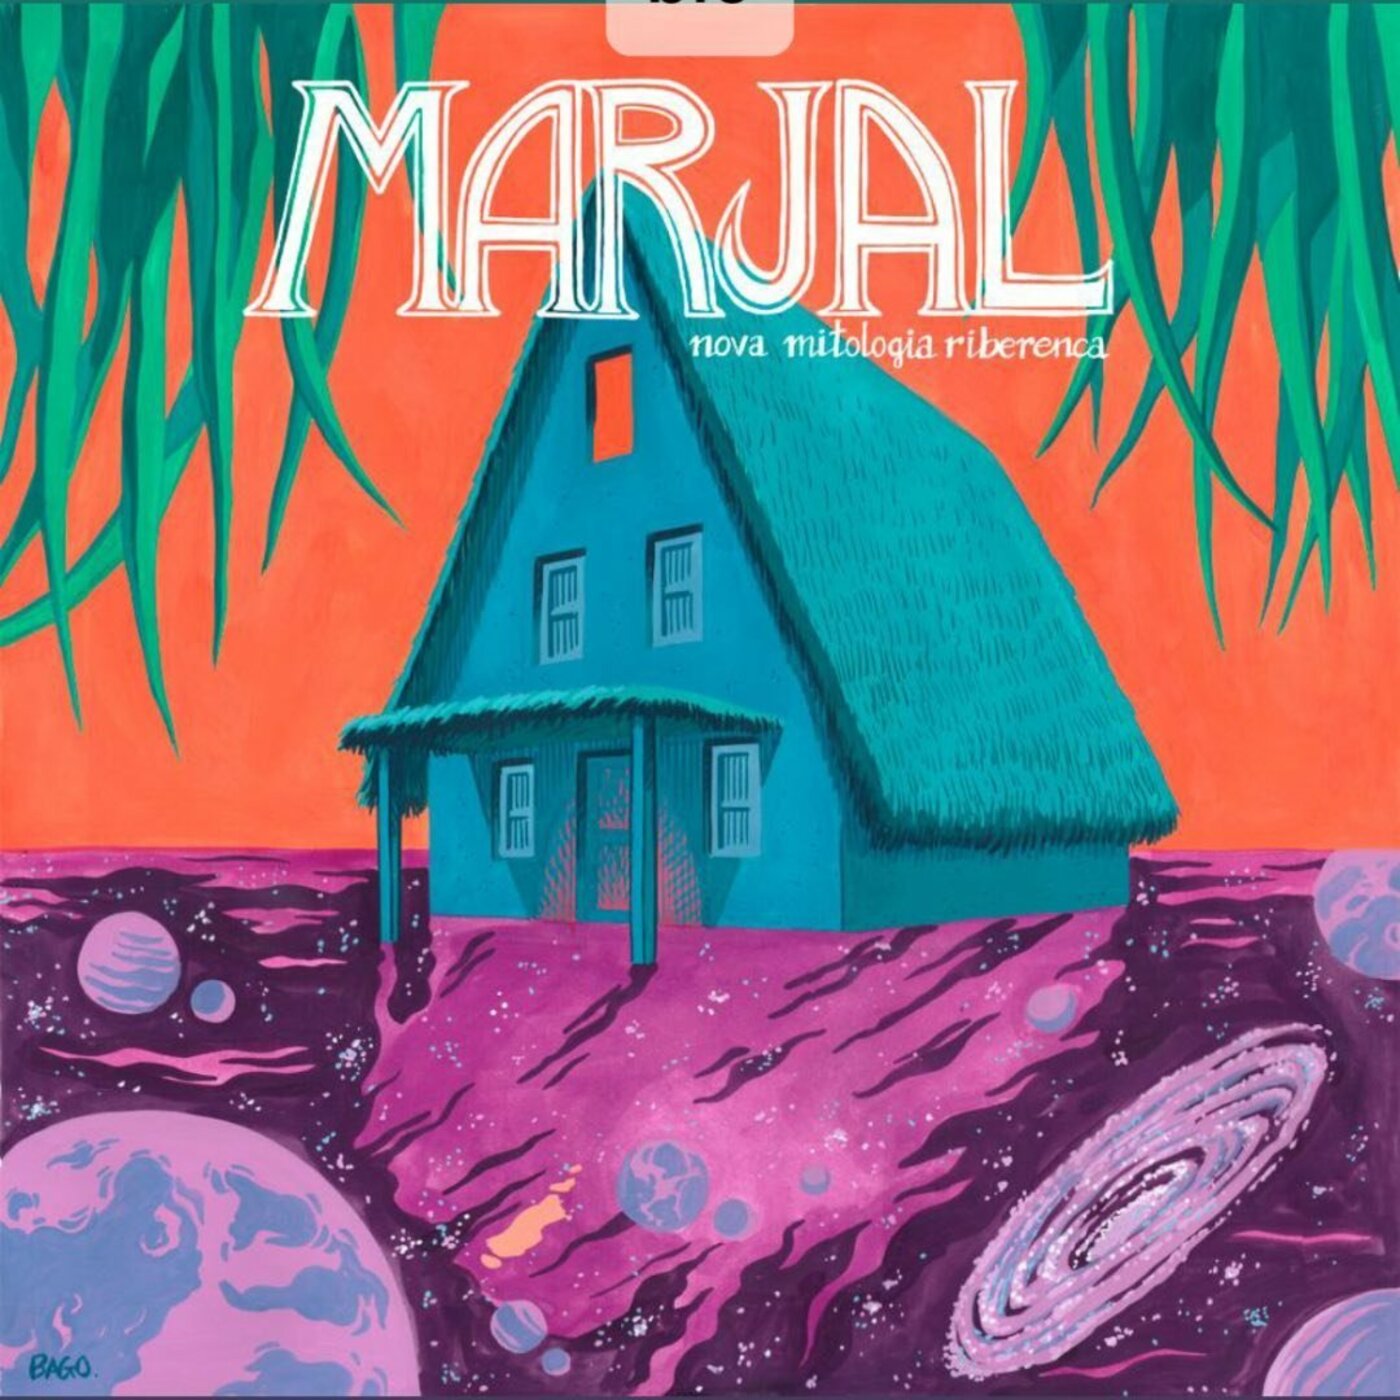 Marjal | musica en valencià